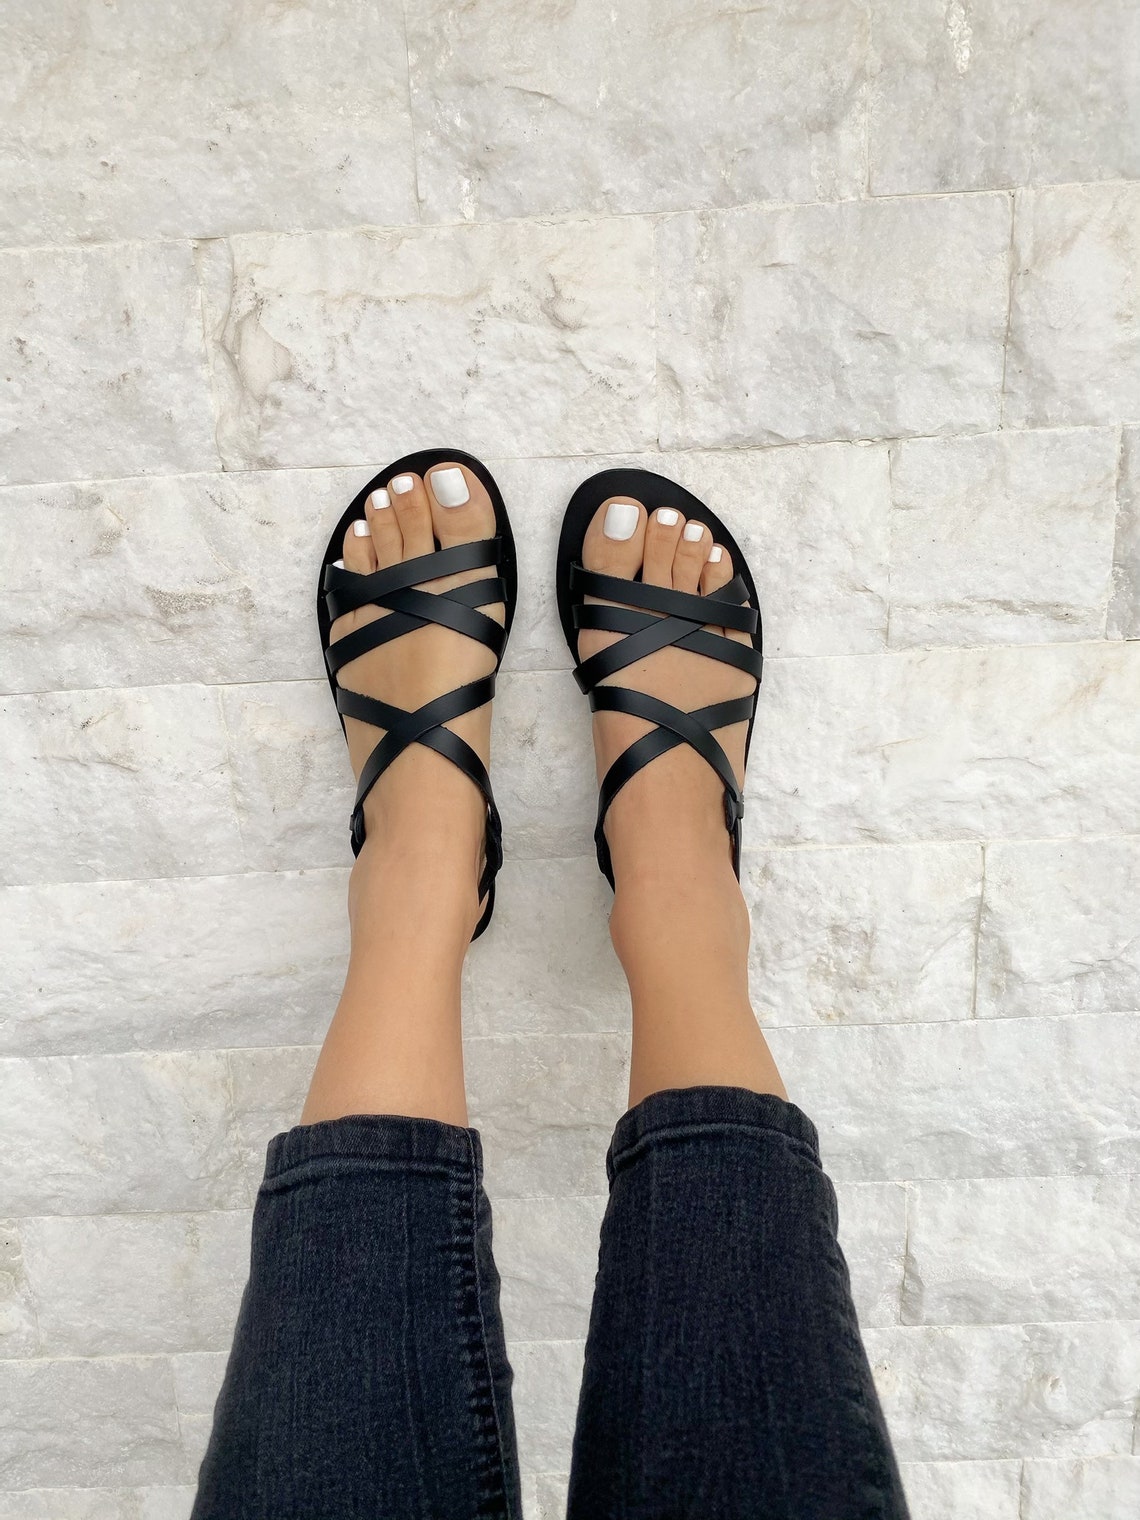 Black Leather Sandals Women Summer Sandals Strappy Sandals | Etsy